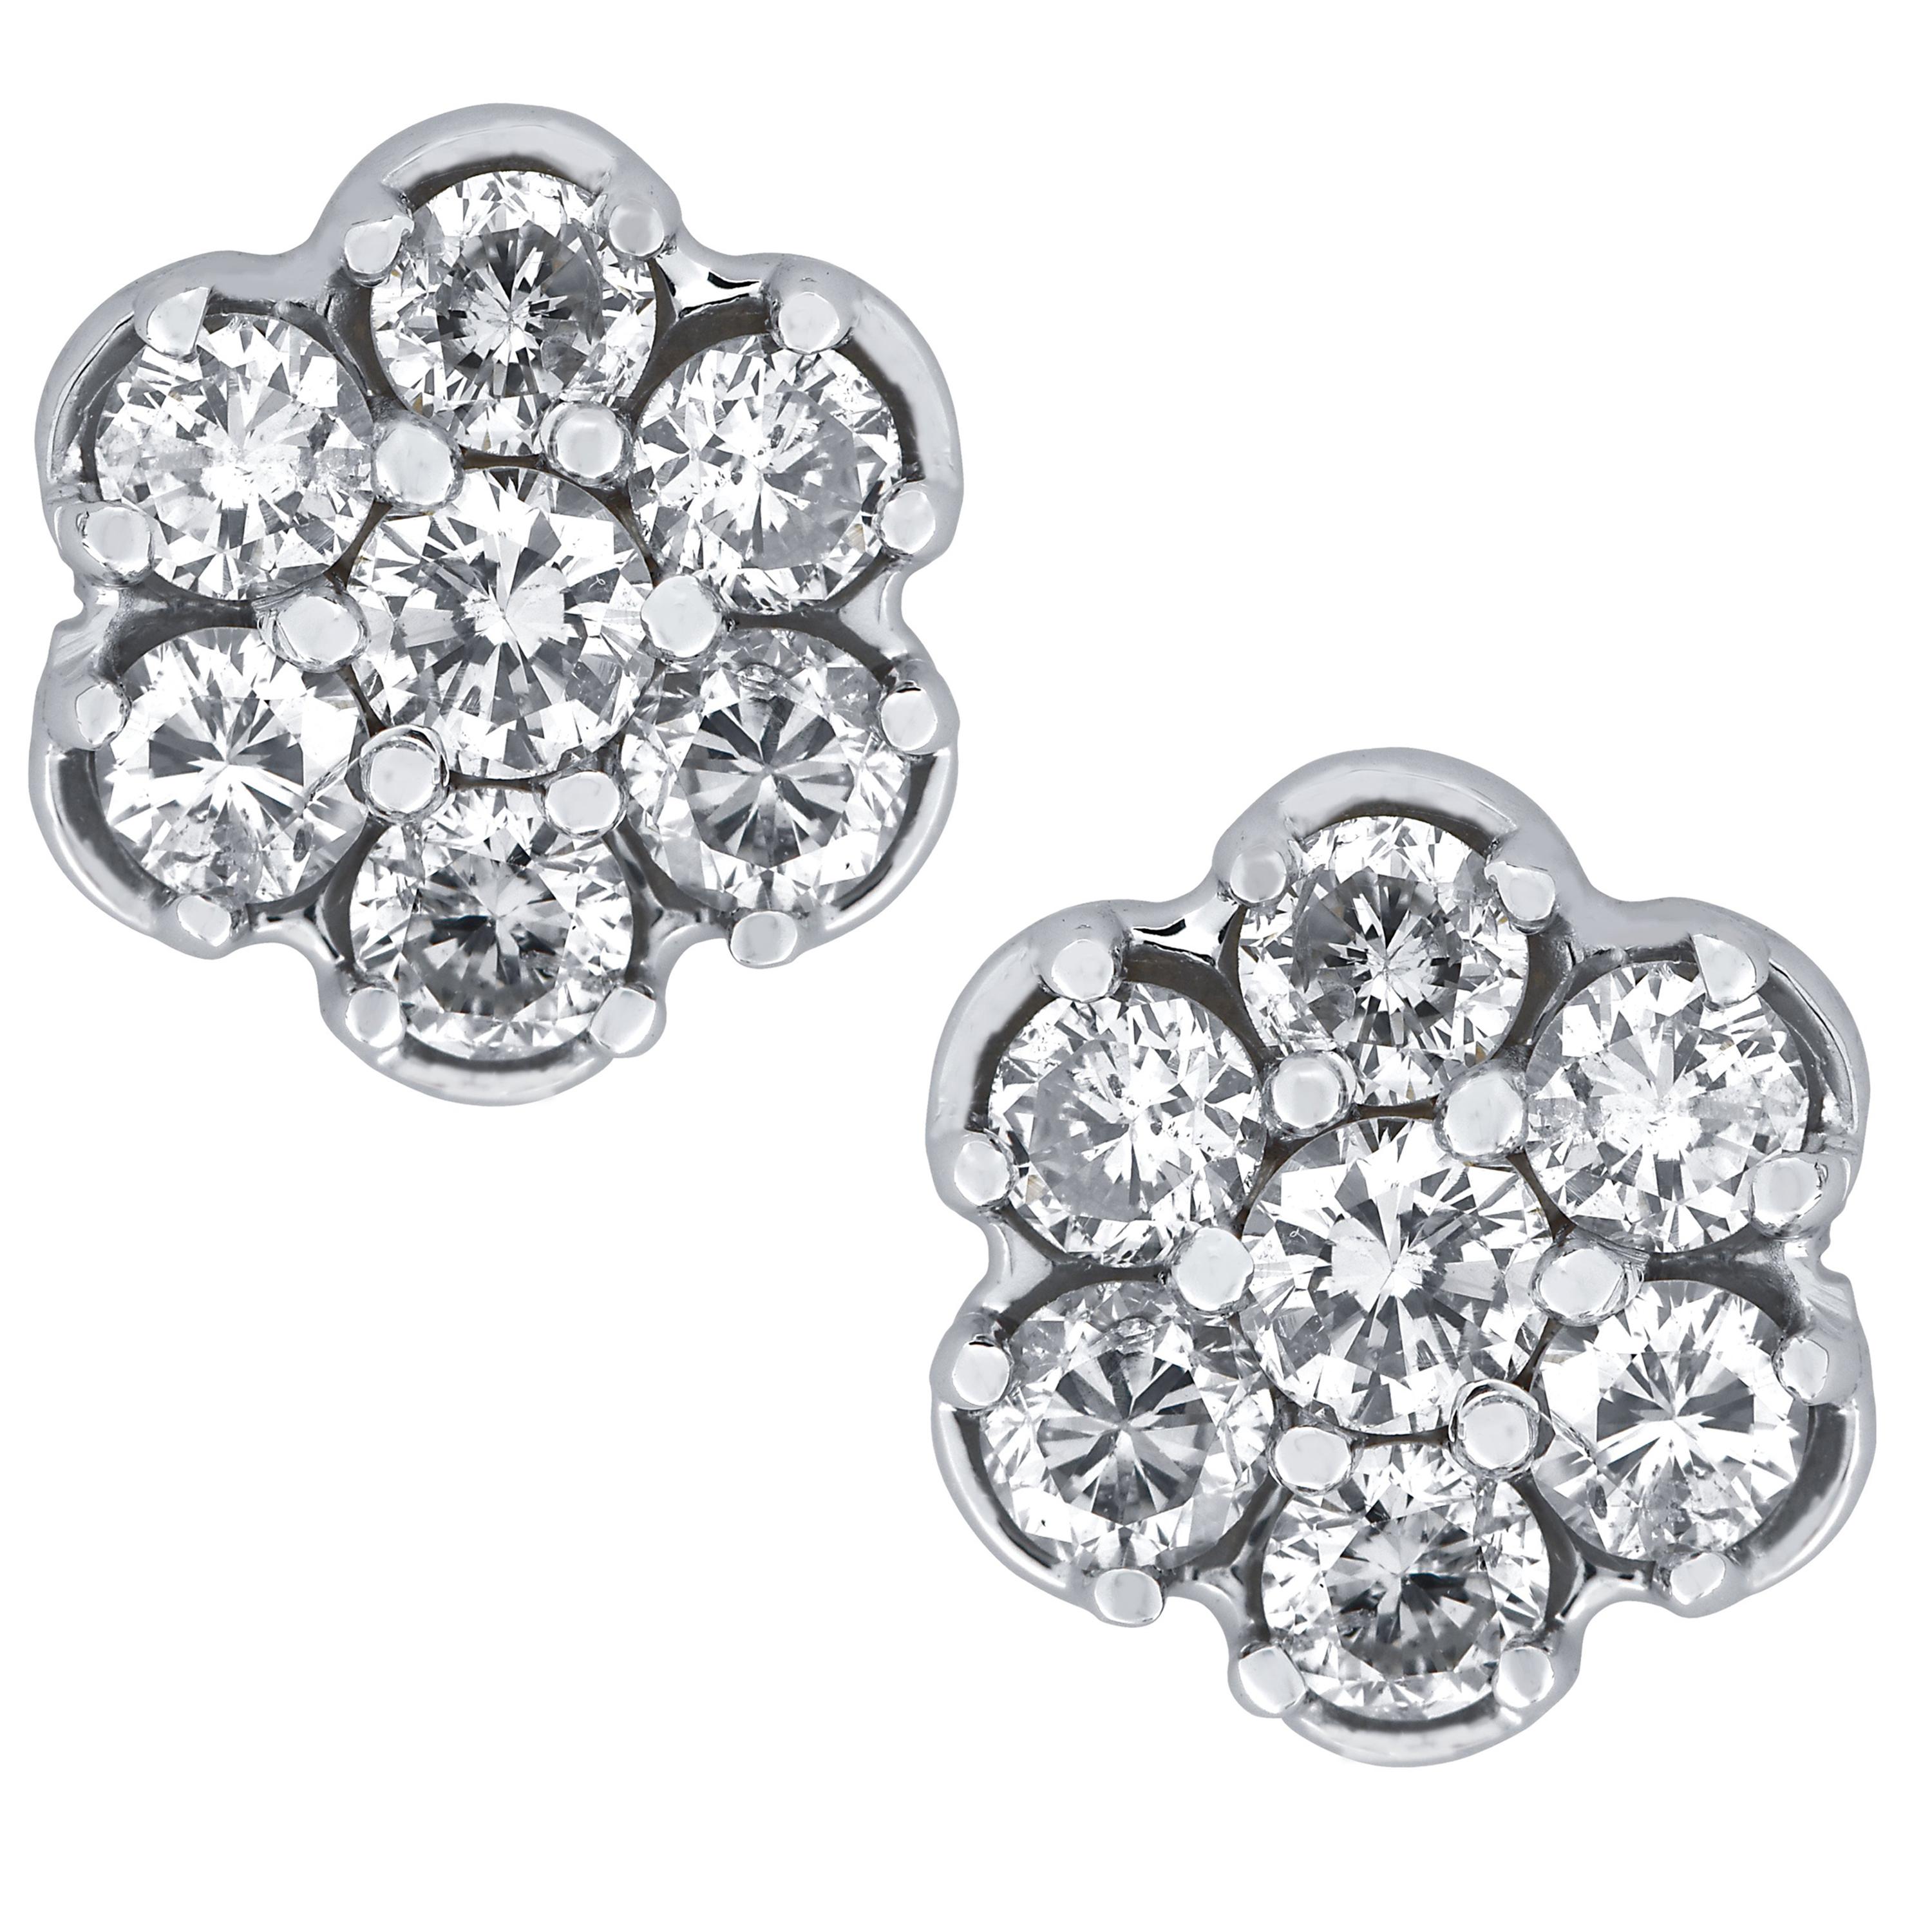 Vivid Diamonds 1 Carat Diamond Cluster Earrings